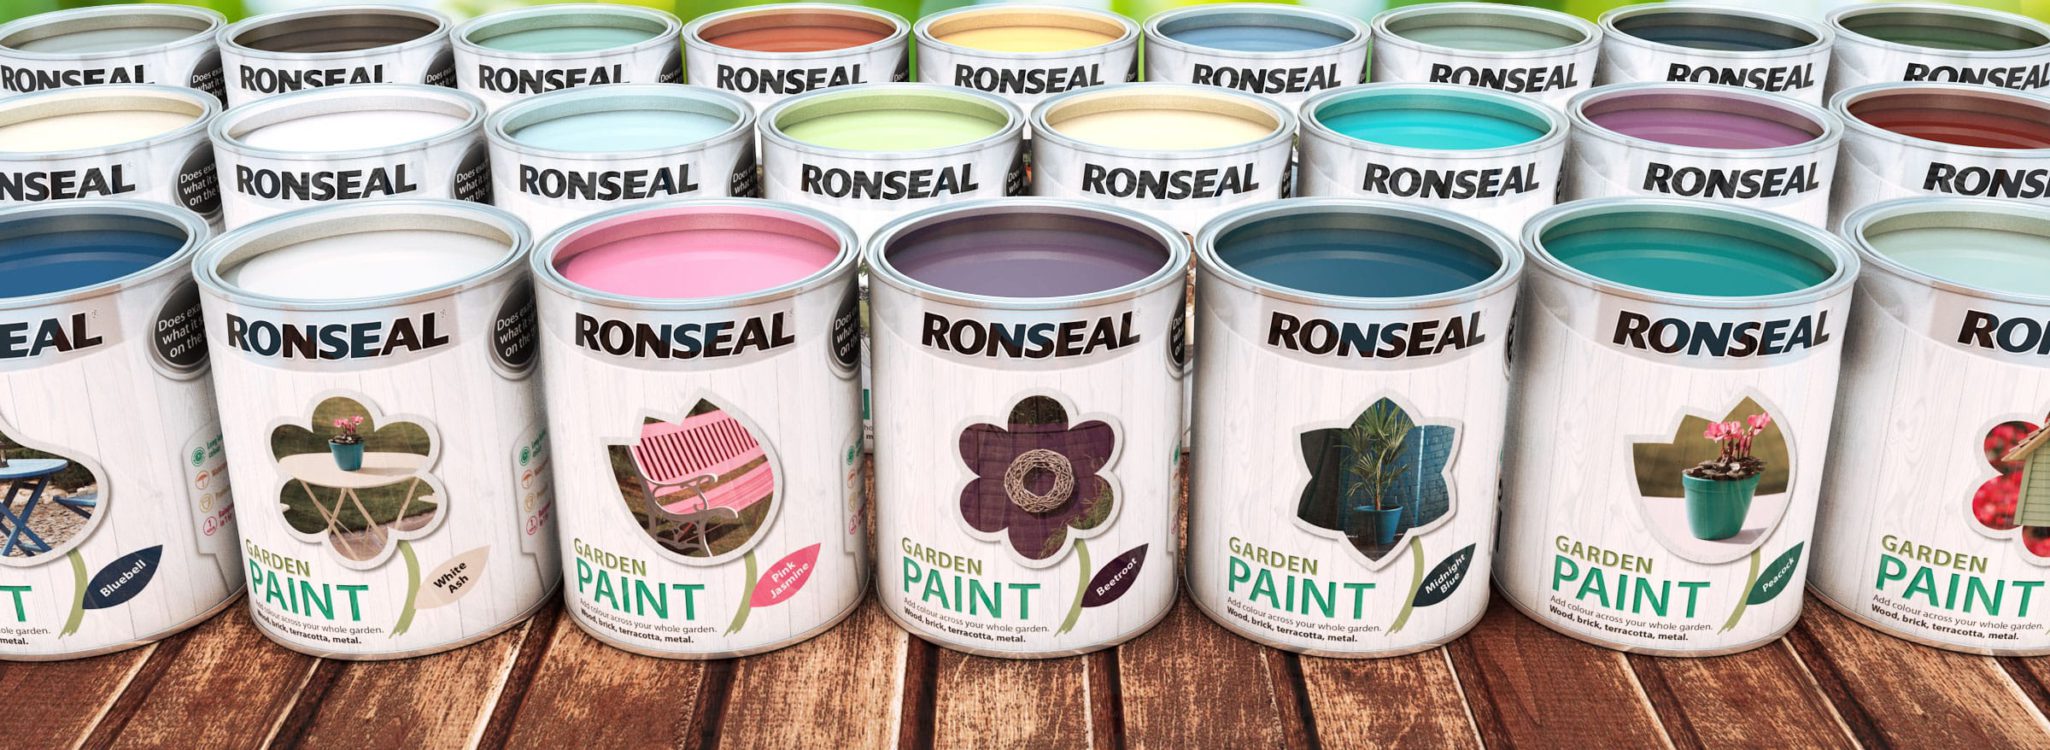 Ronseal Garden Colours Branding And